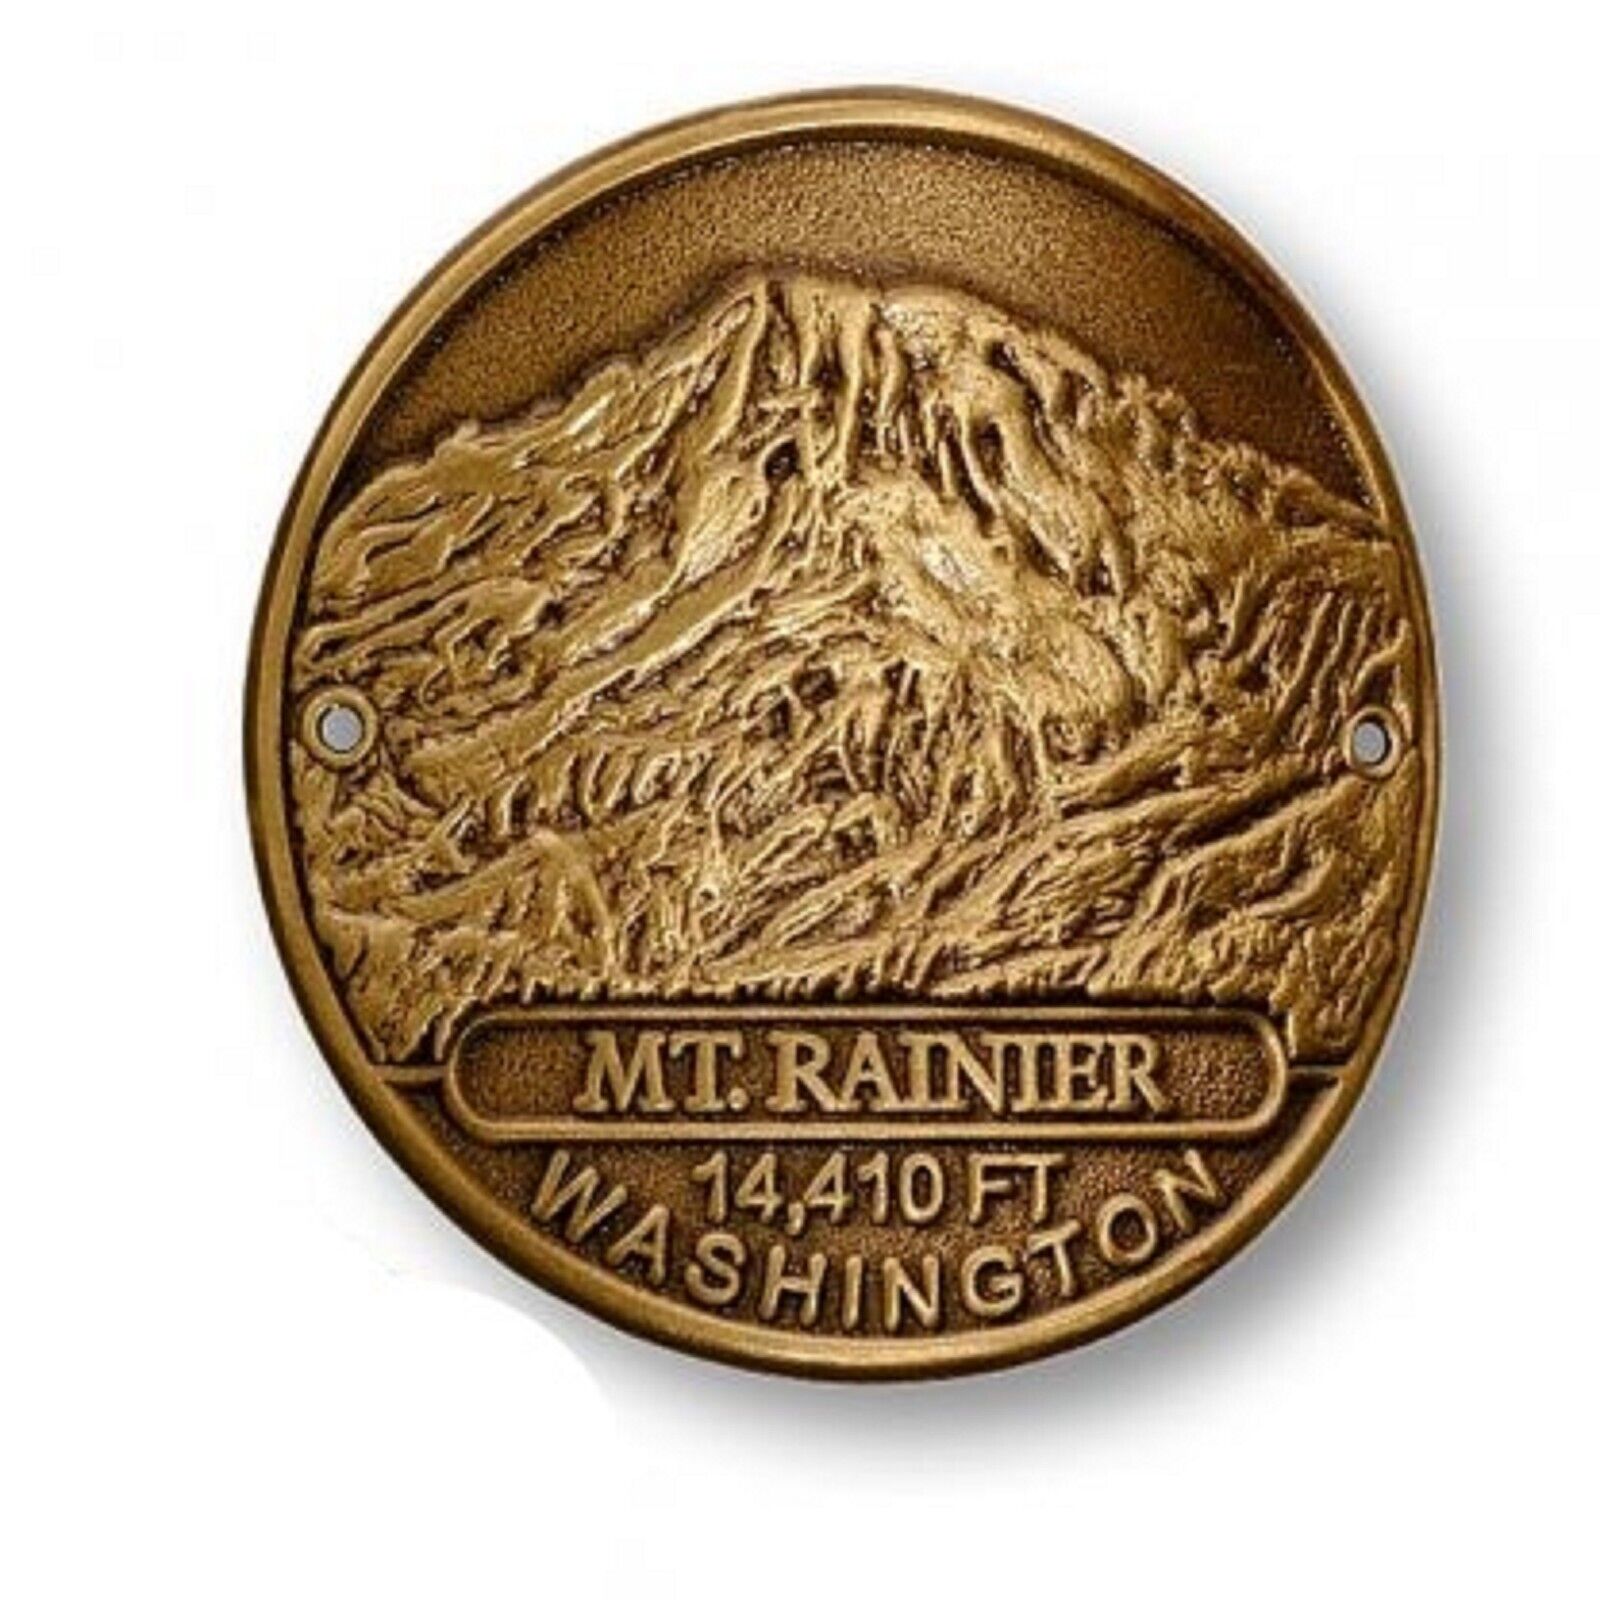 MT. RAINIER WASHINGTON HIKING STICK MEDALLION CHALLENGE COIN